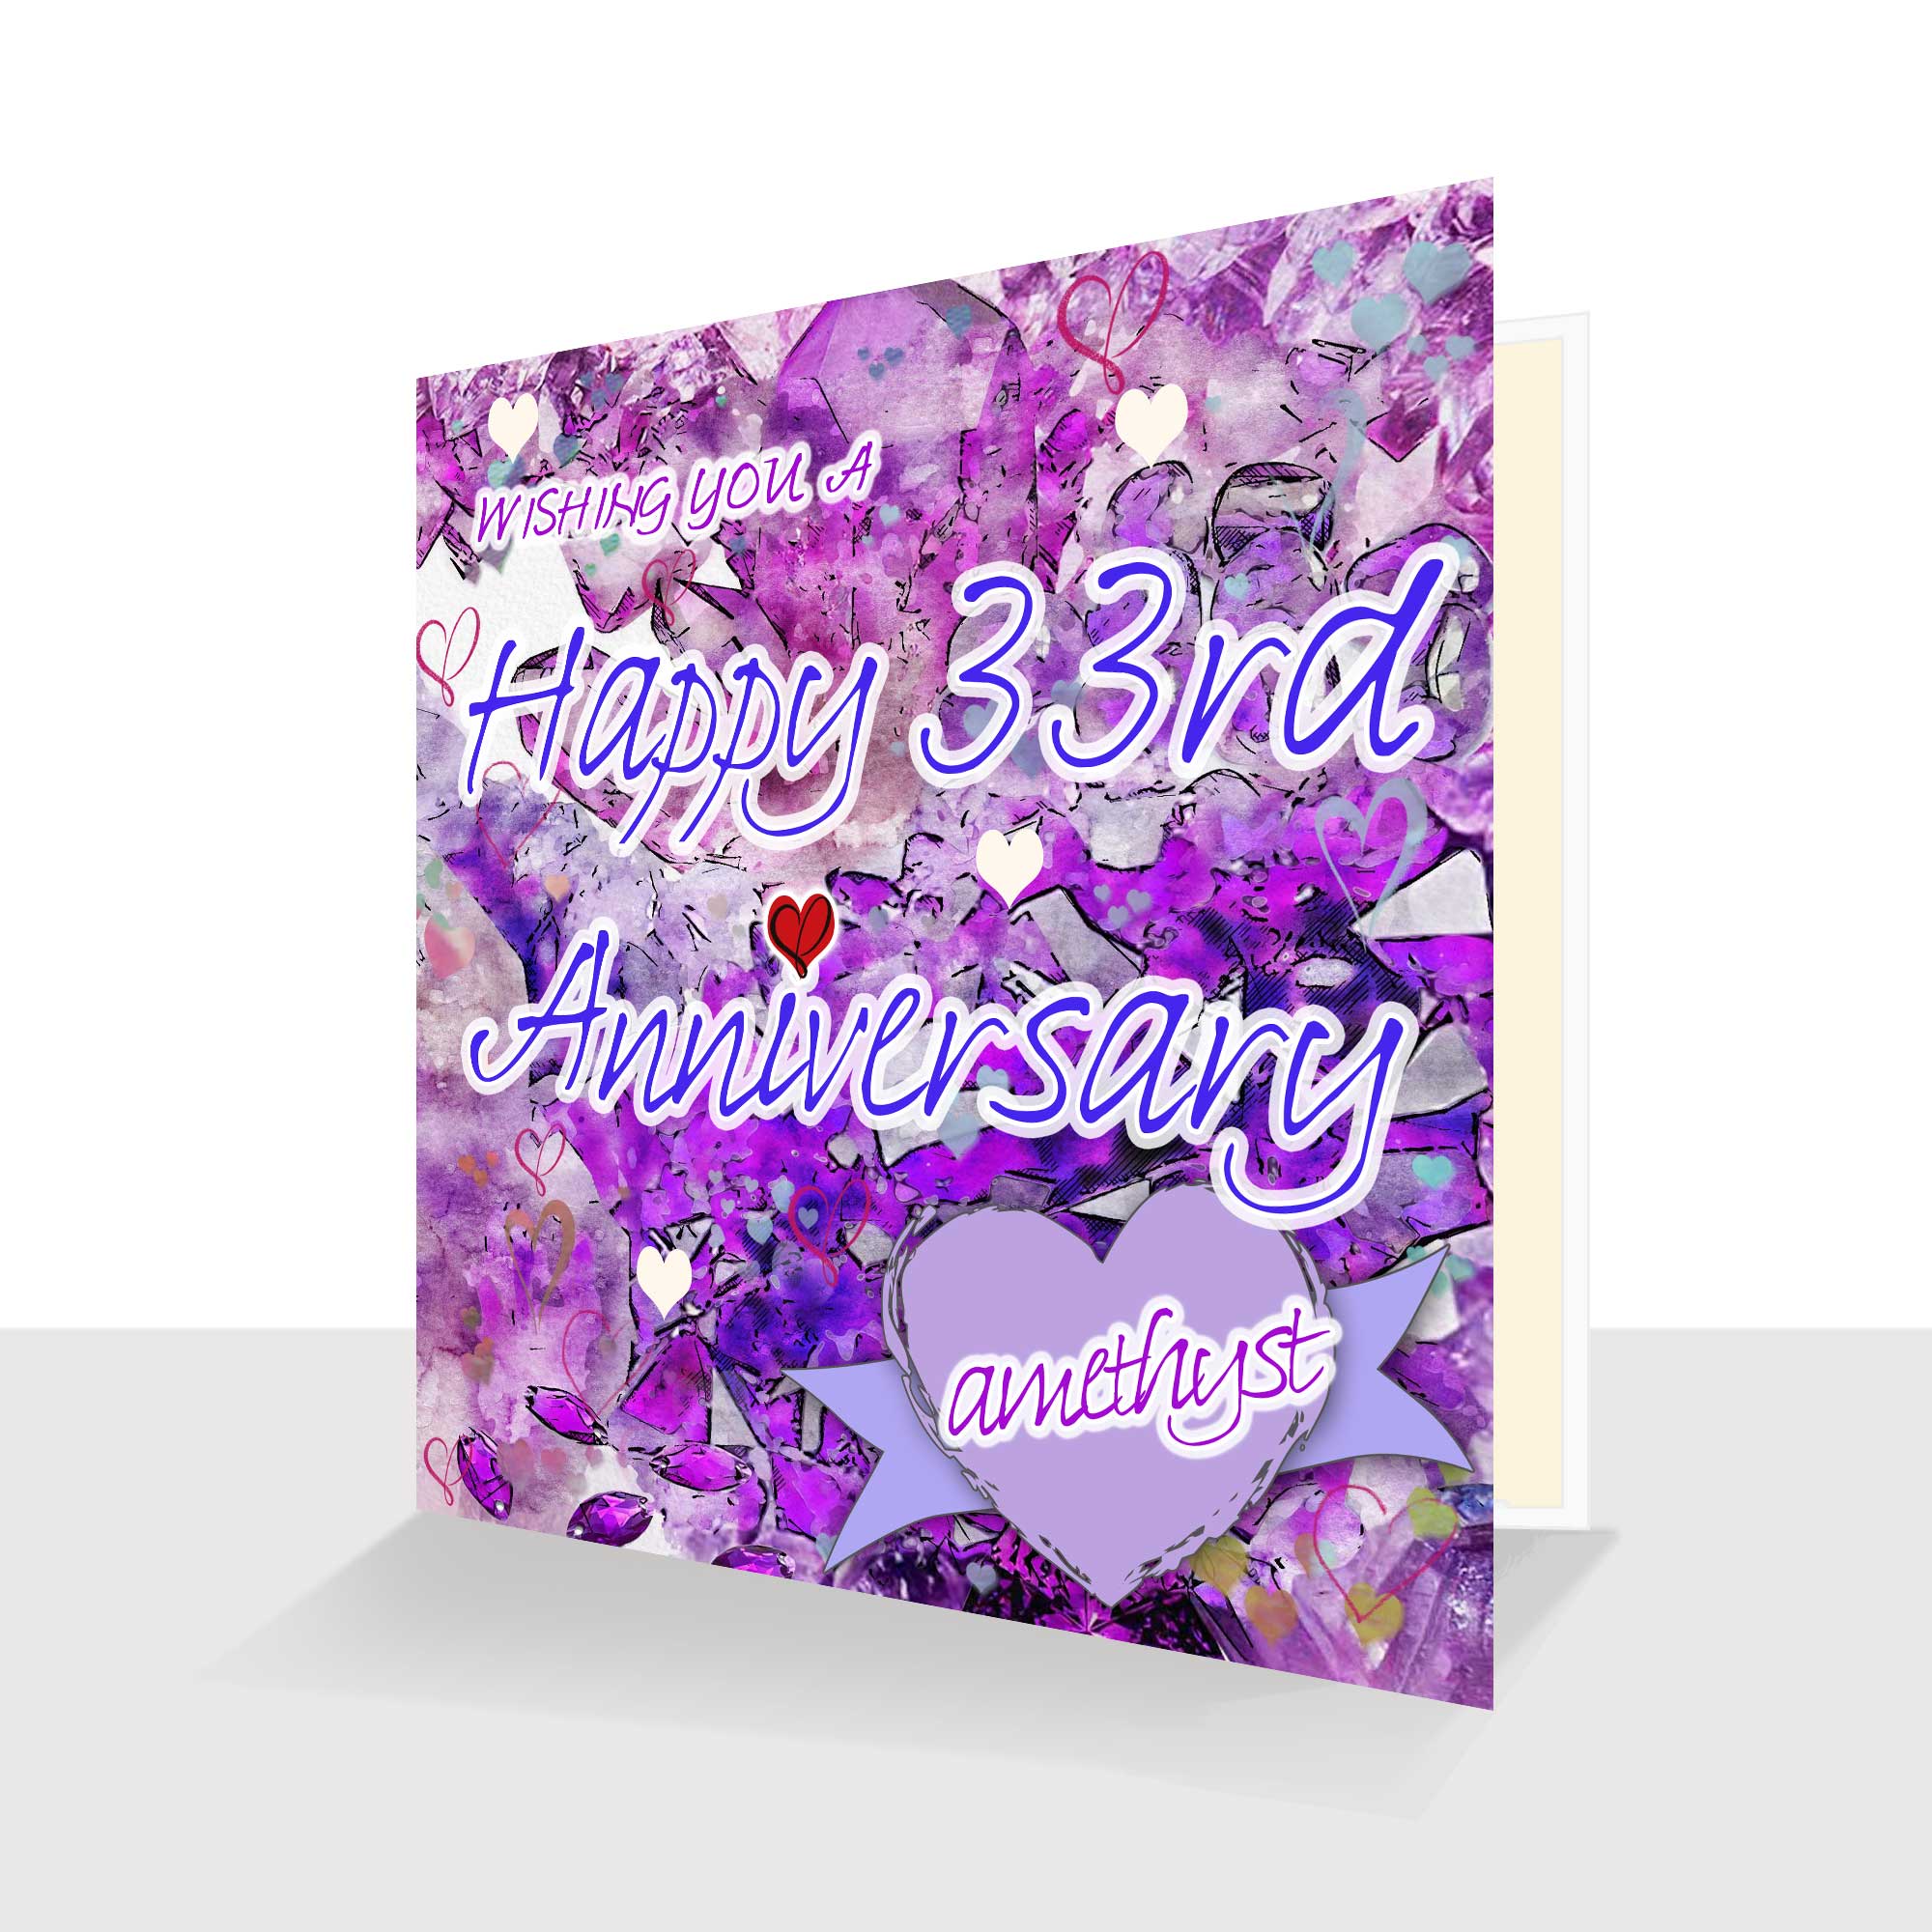 33rd Wedding Anniversary Card : Amethyst Wedding Anniversary : Watercolour Design